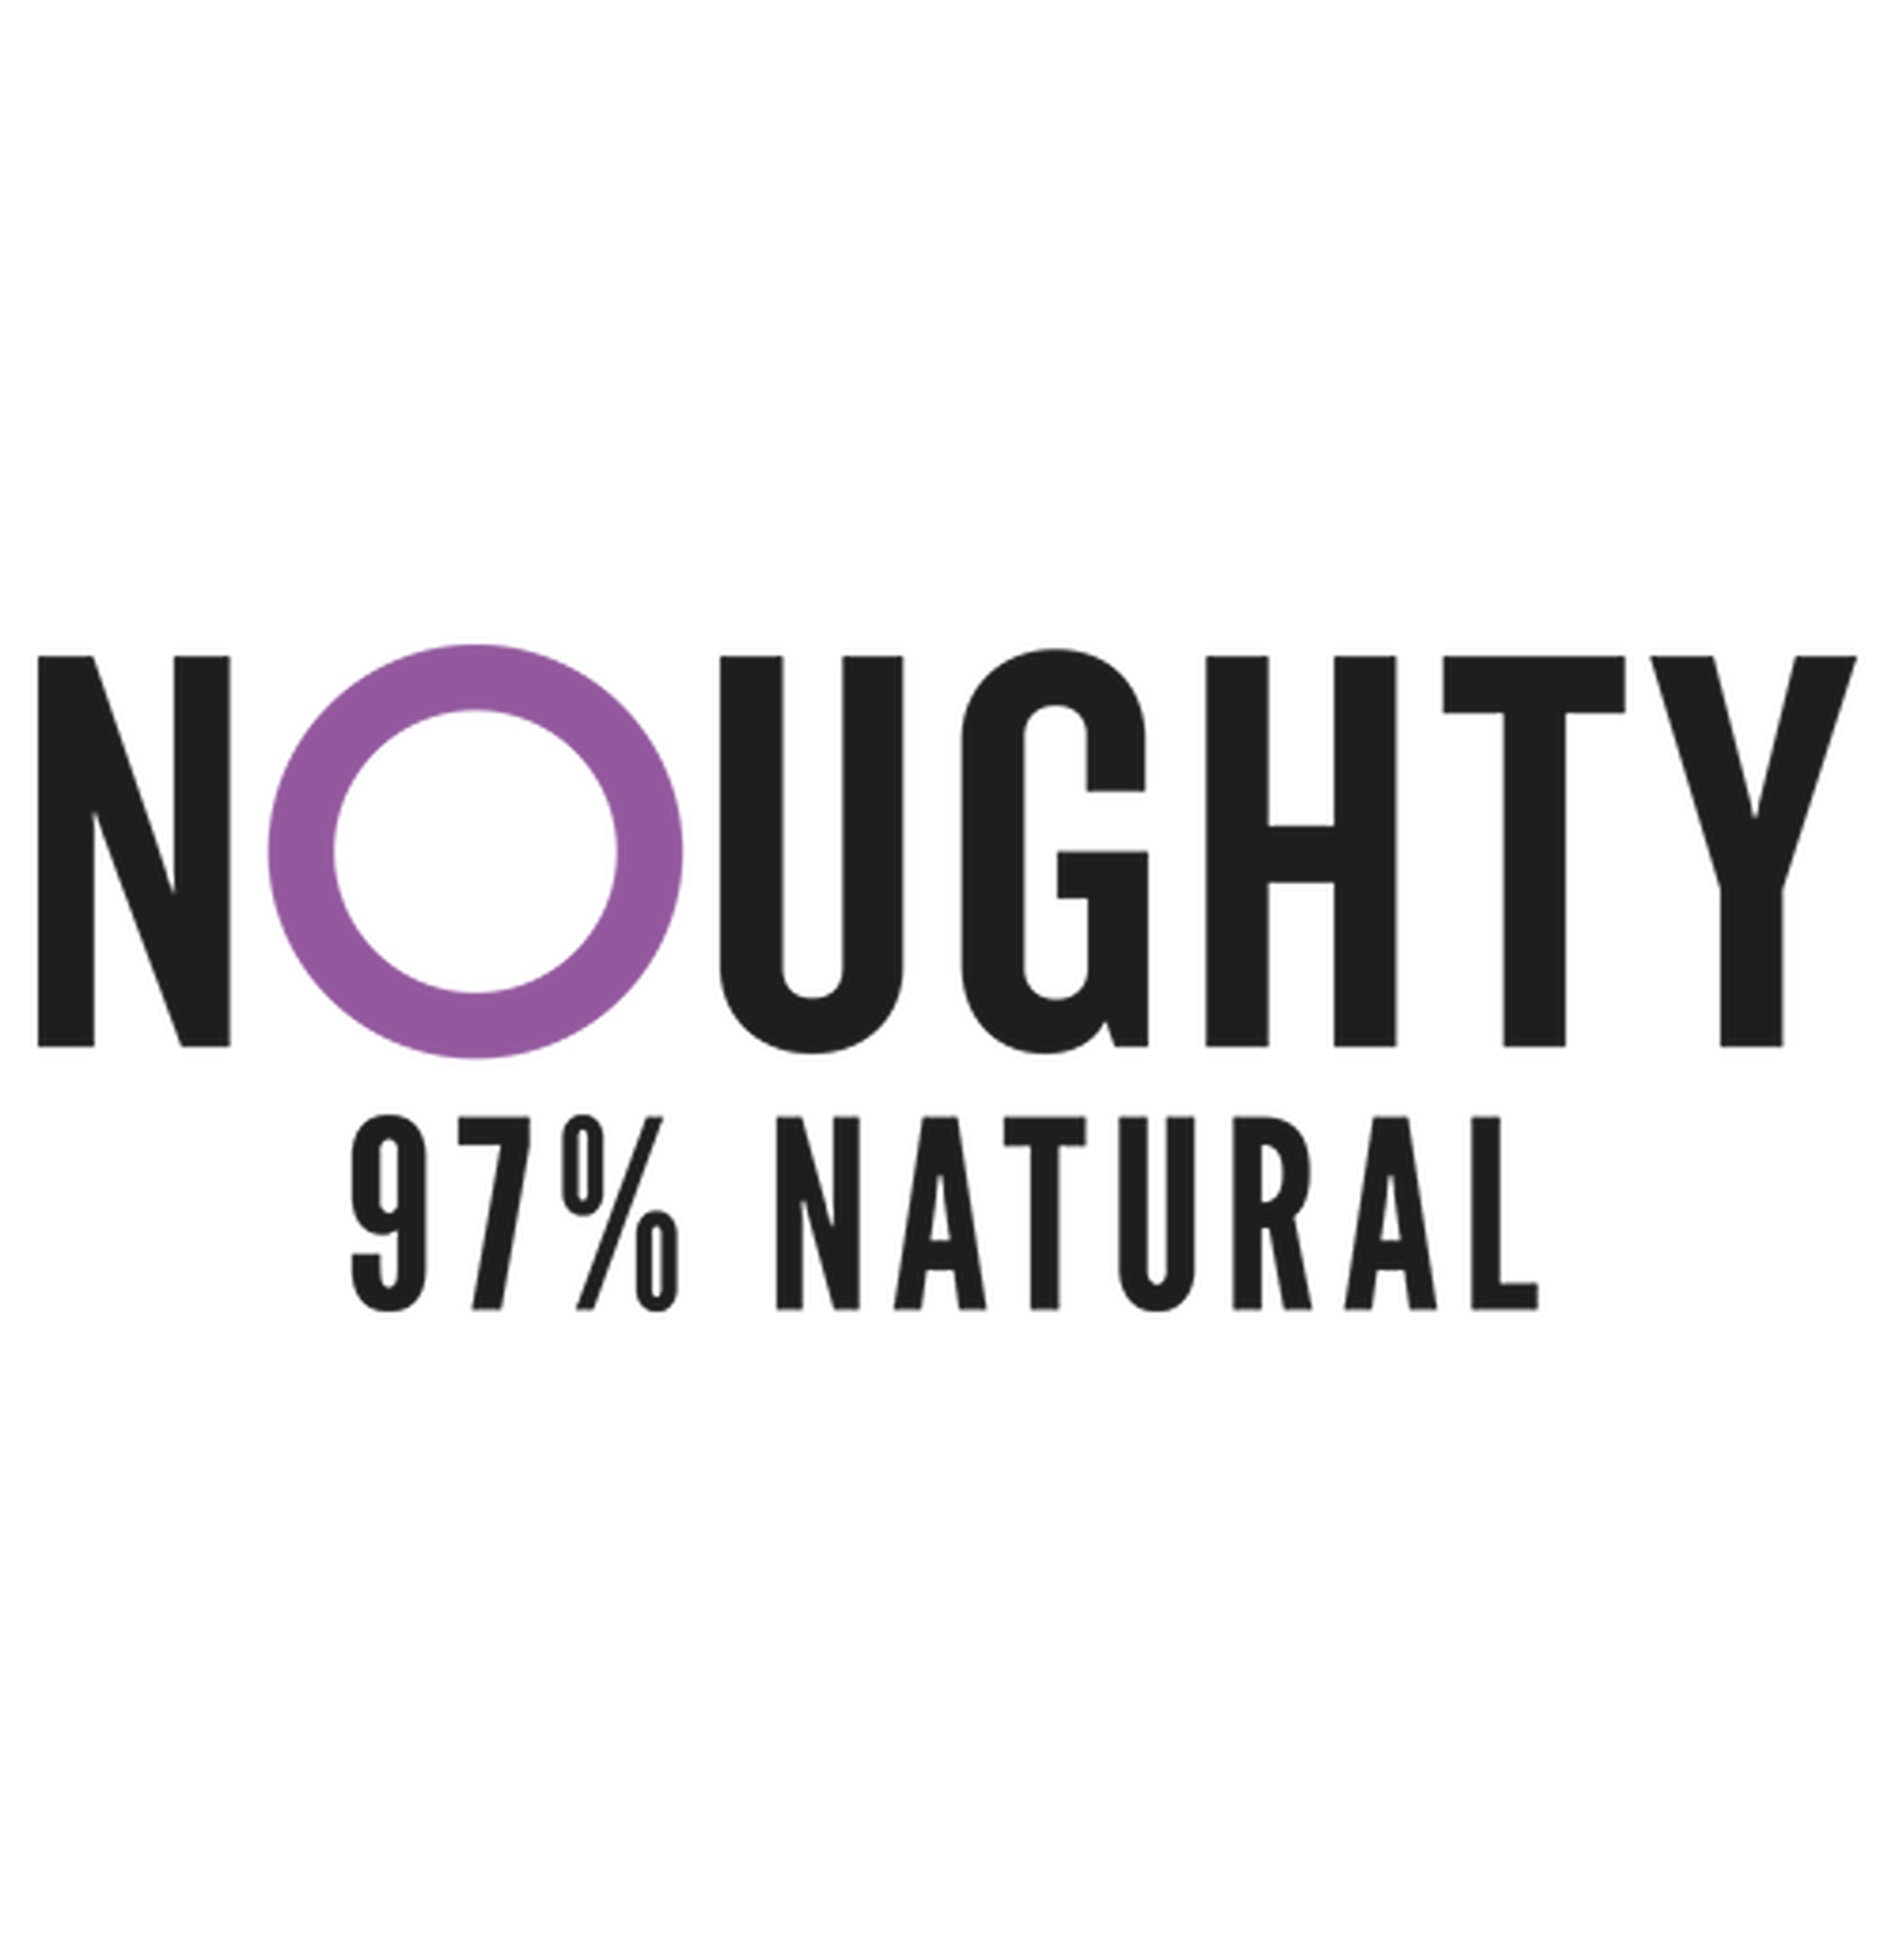 Noughty logotype